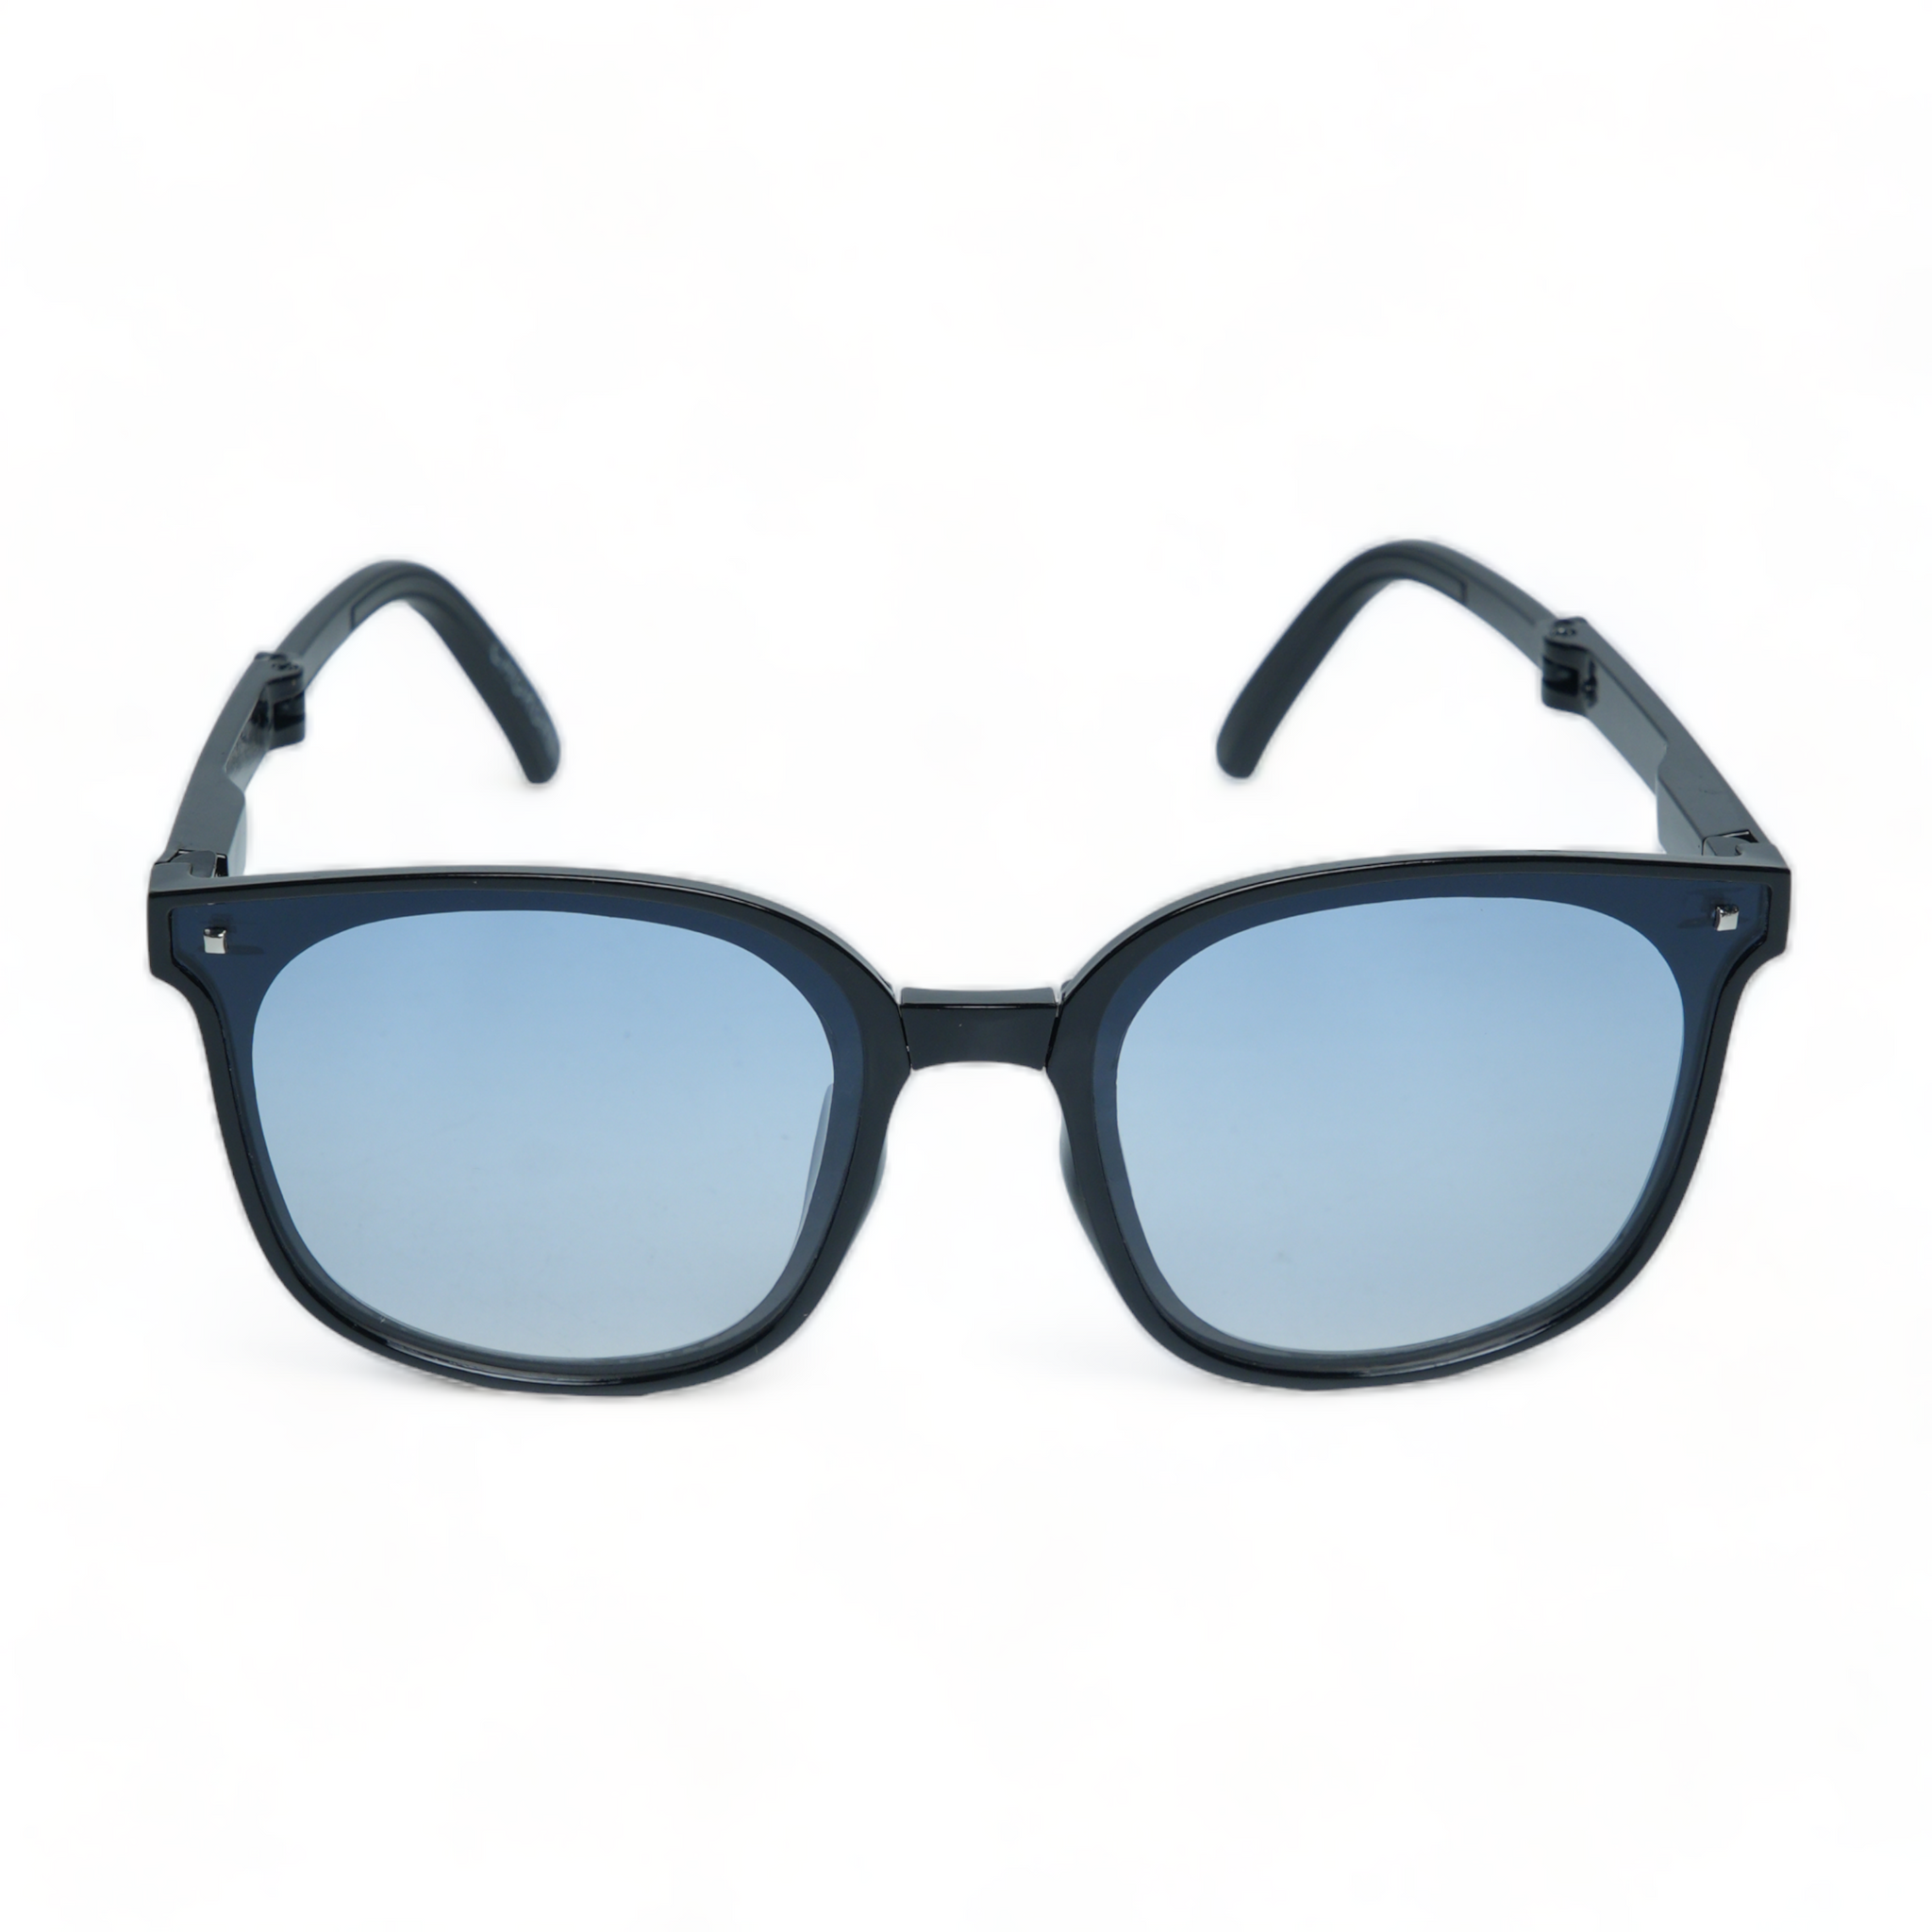 Chokore Stylish Folding Sunglasses with UV 400 Protection (Black & Blue)